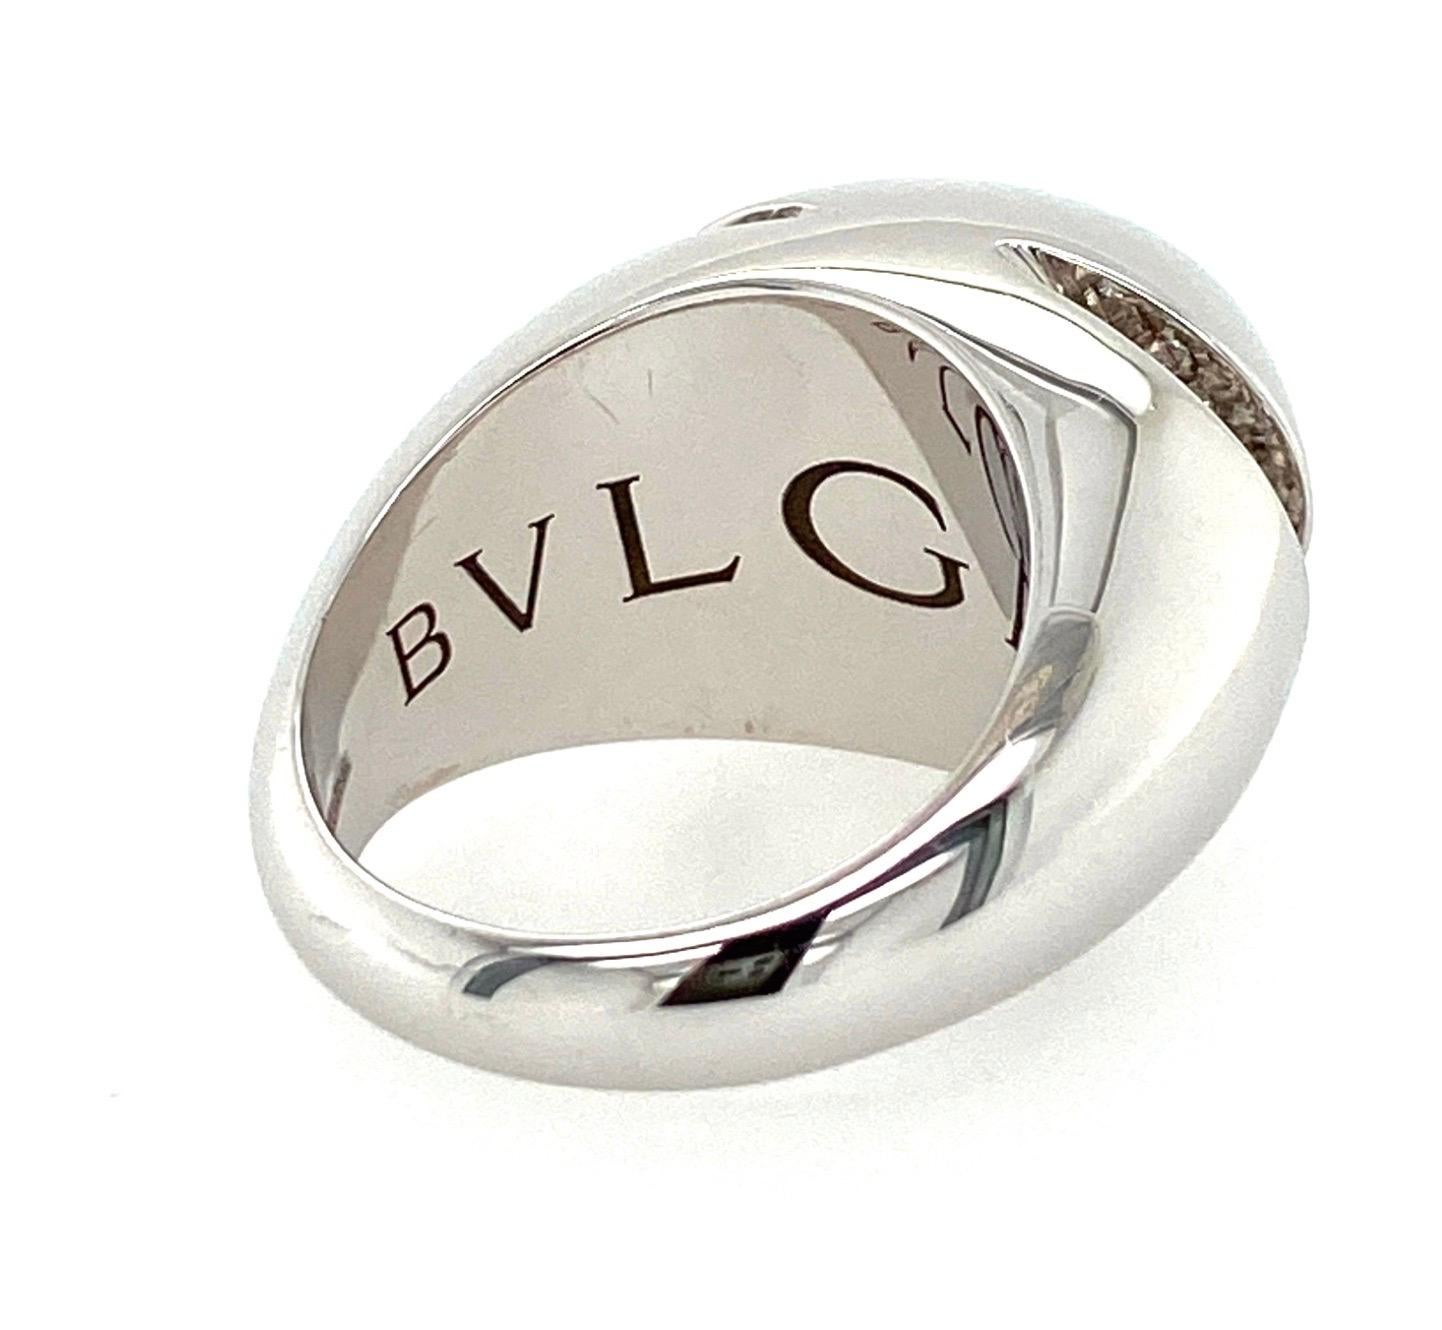 Contemporary Bvlgari White Gold and Diamond Ring